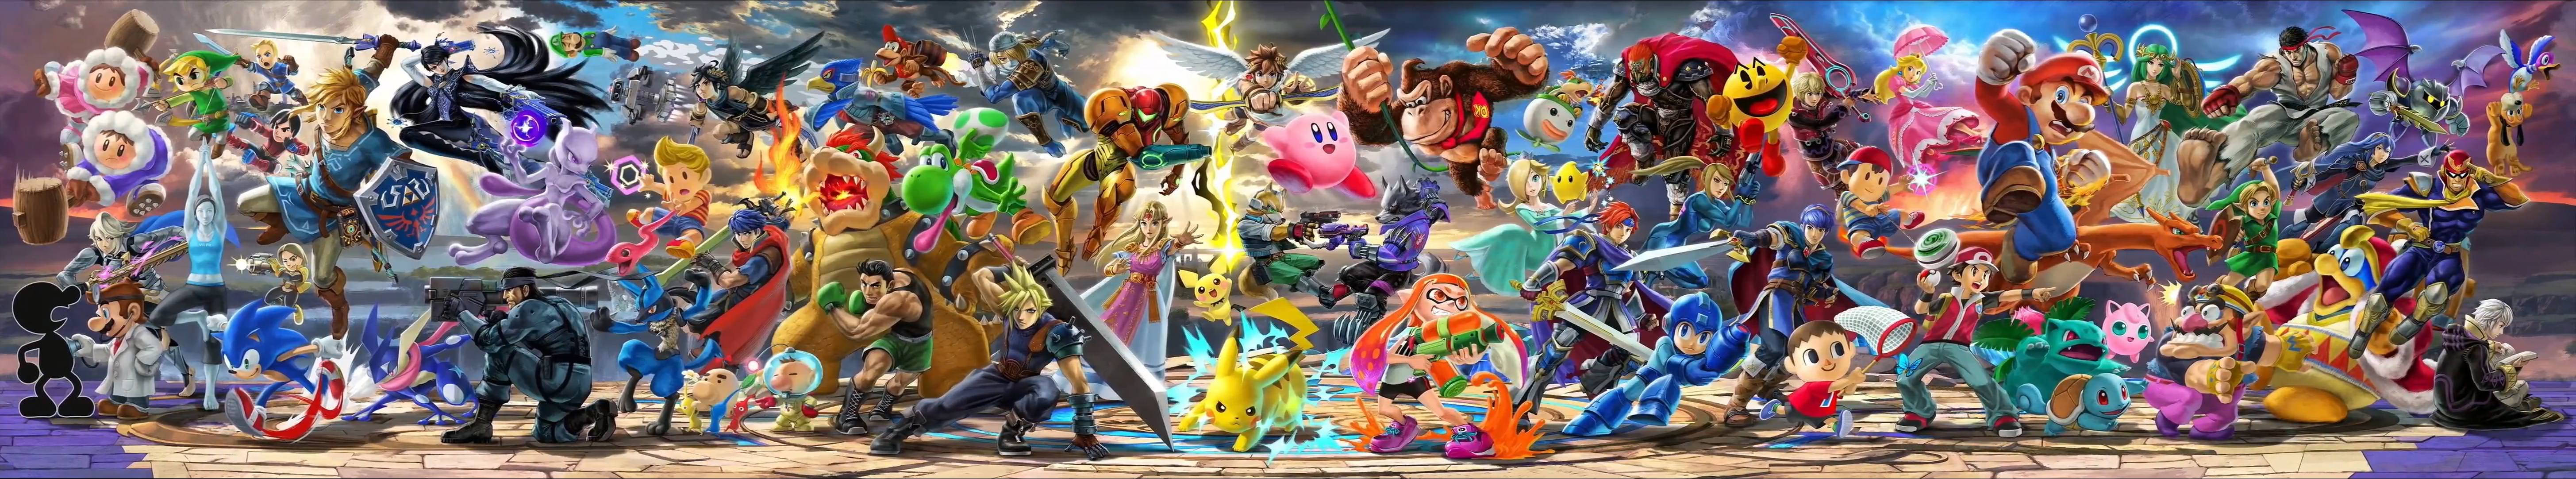 Super Smash Bros Ultimate Heroes Panorama Background